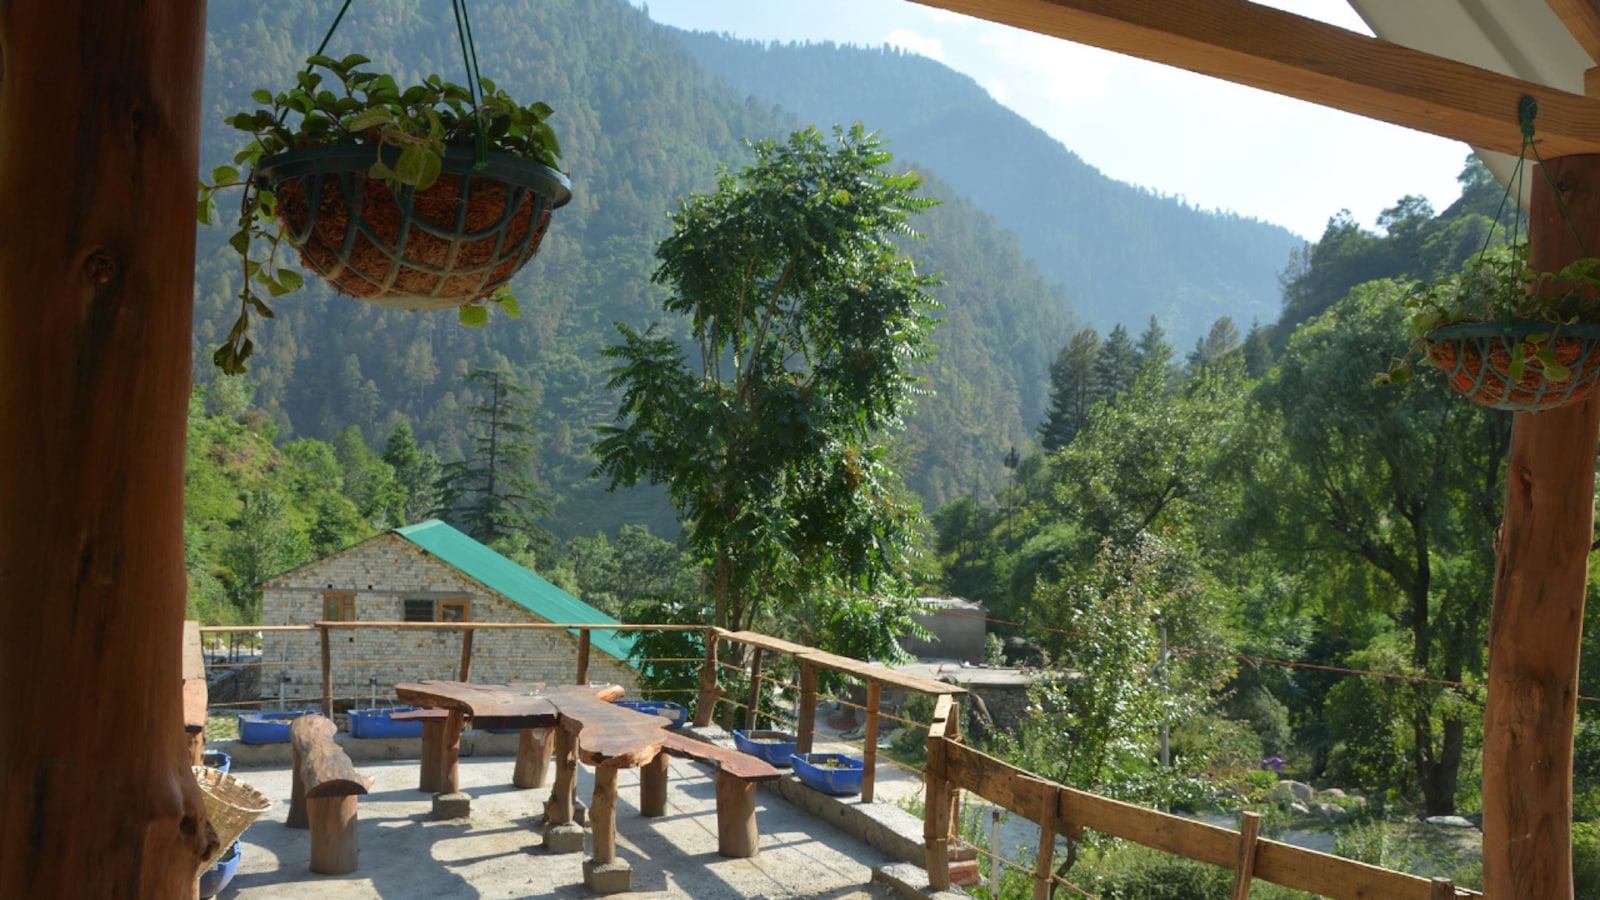 Pahari Picnic Porn Hd - 10 homestays in Himachal Pradesh worth checking out